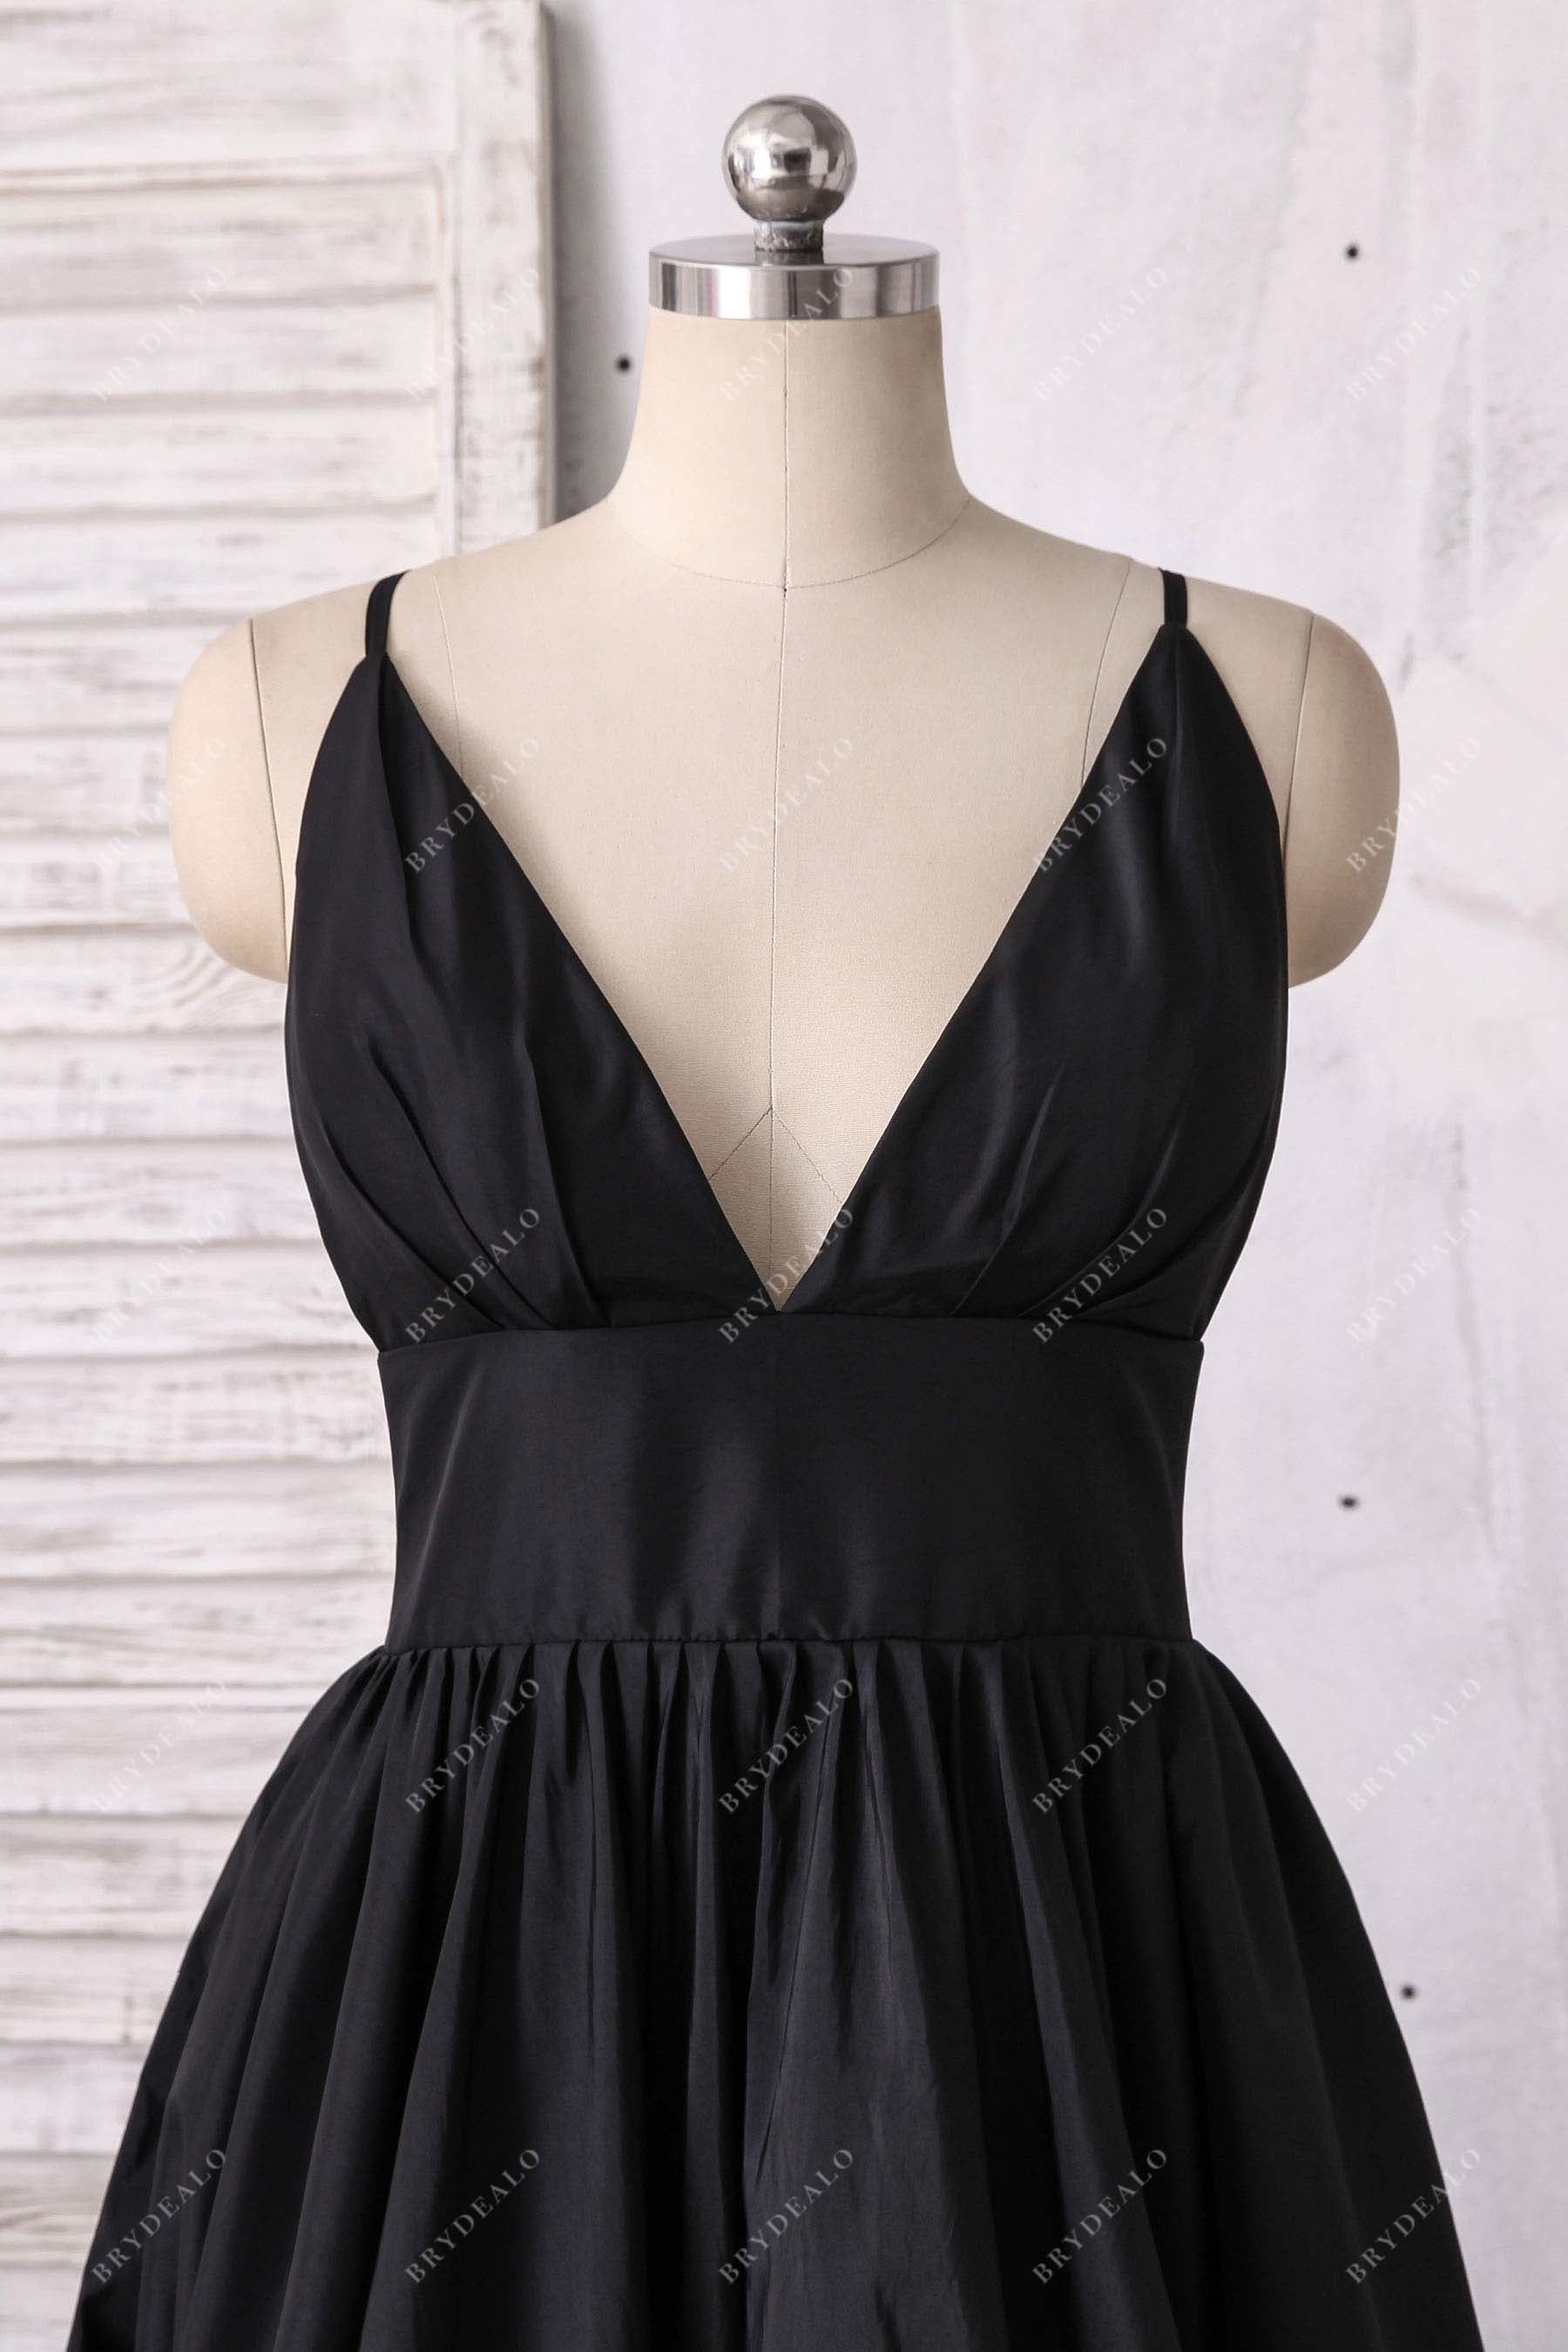 V-back spaghetti straps black prom gown